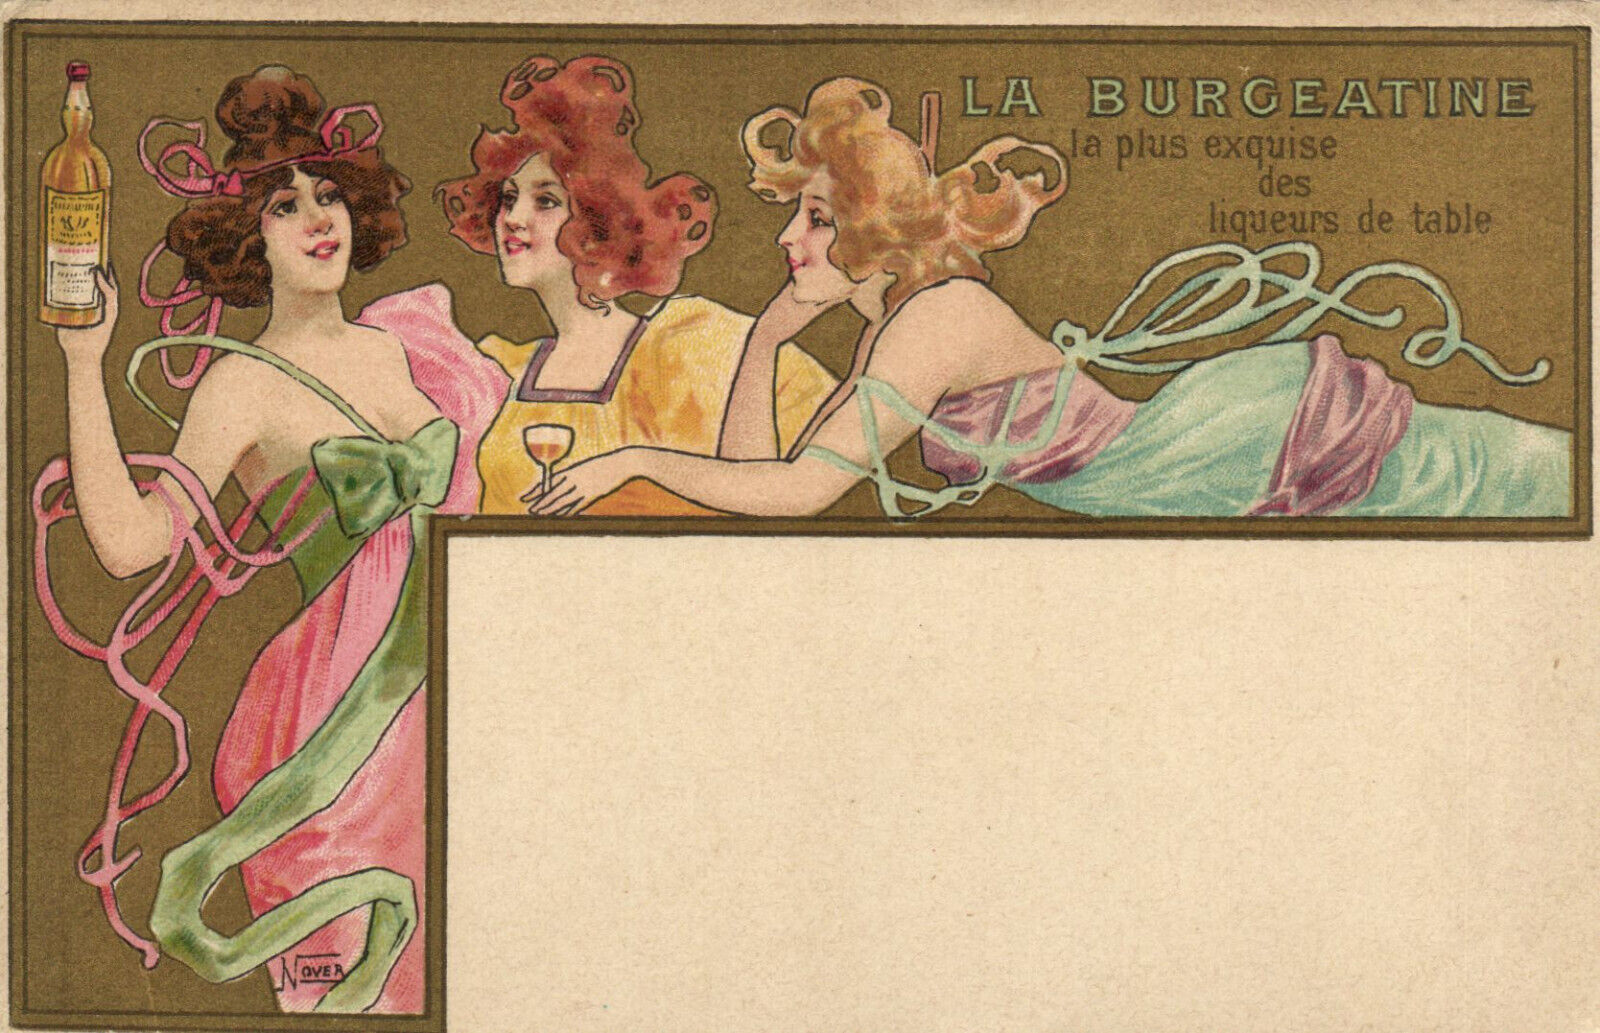 PC ADVERTISING, LA BURGEATINE, LA PLUS EXQUISE, Vintage Postcard (b51941)